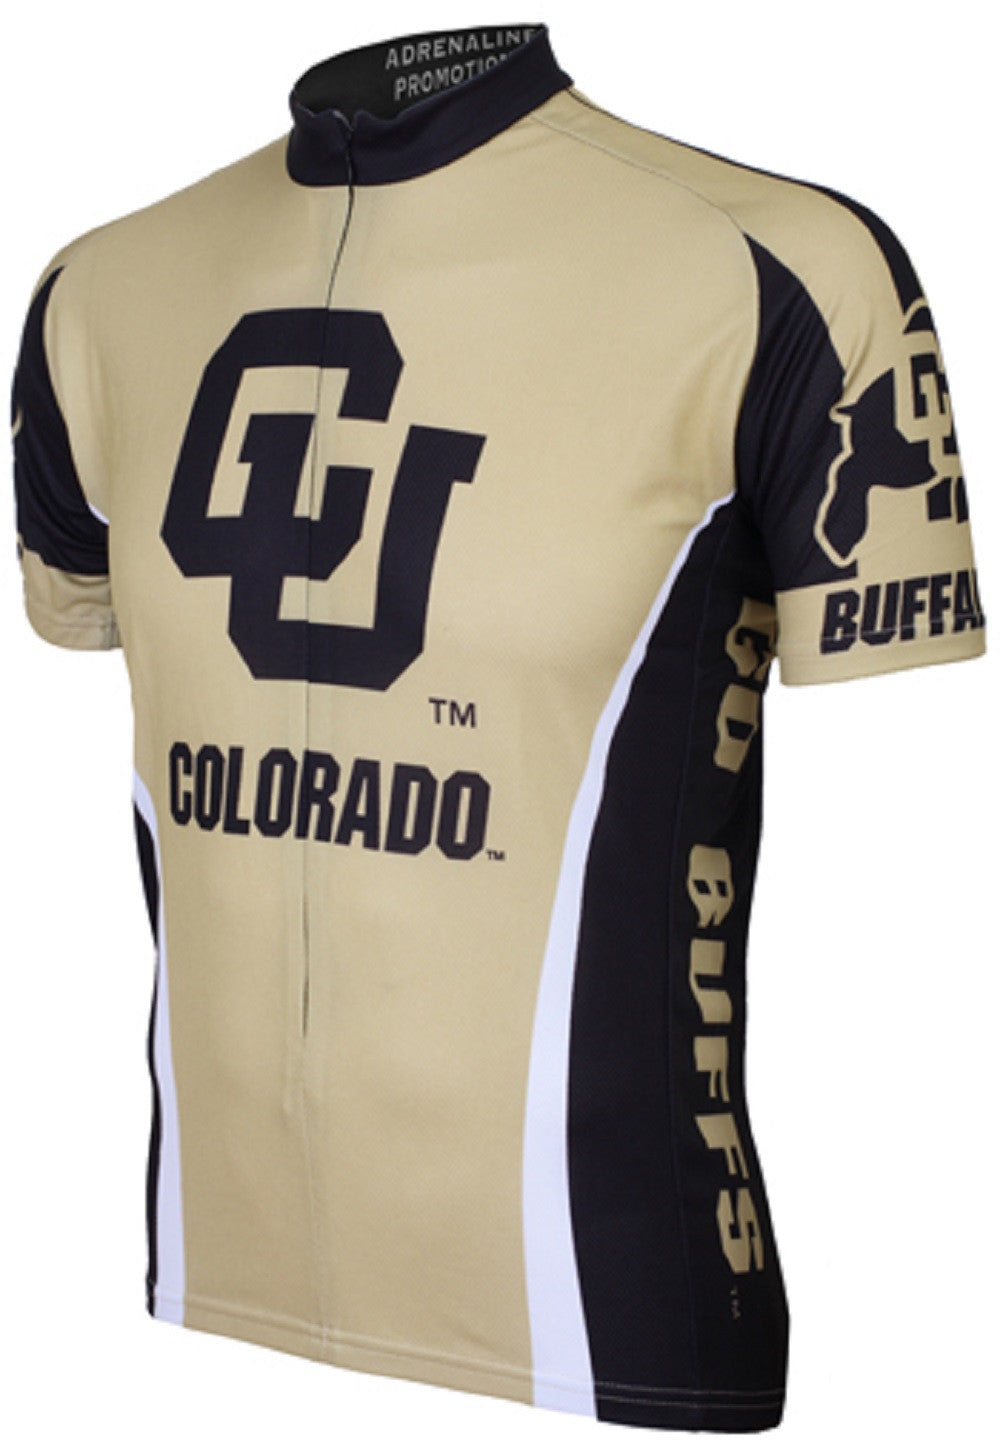 Colorado University Buffaloes Men's Road Cycling Jersey (S, M, L, XL, 2XL, 3XL)